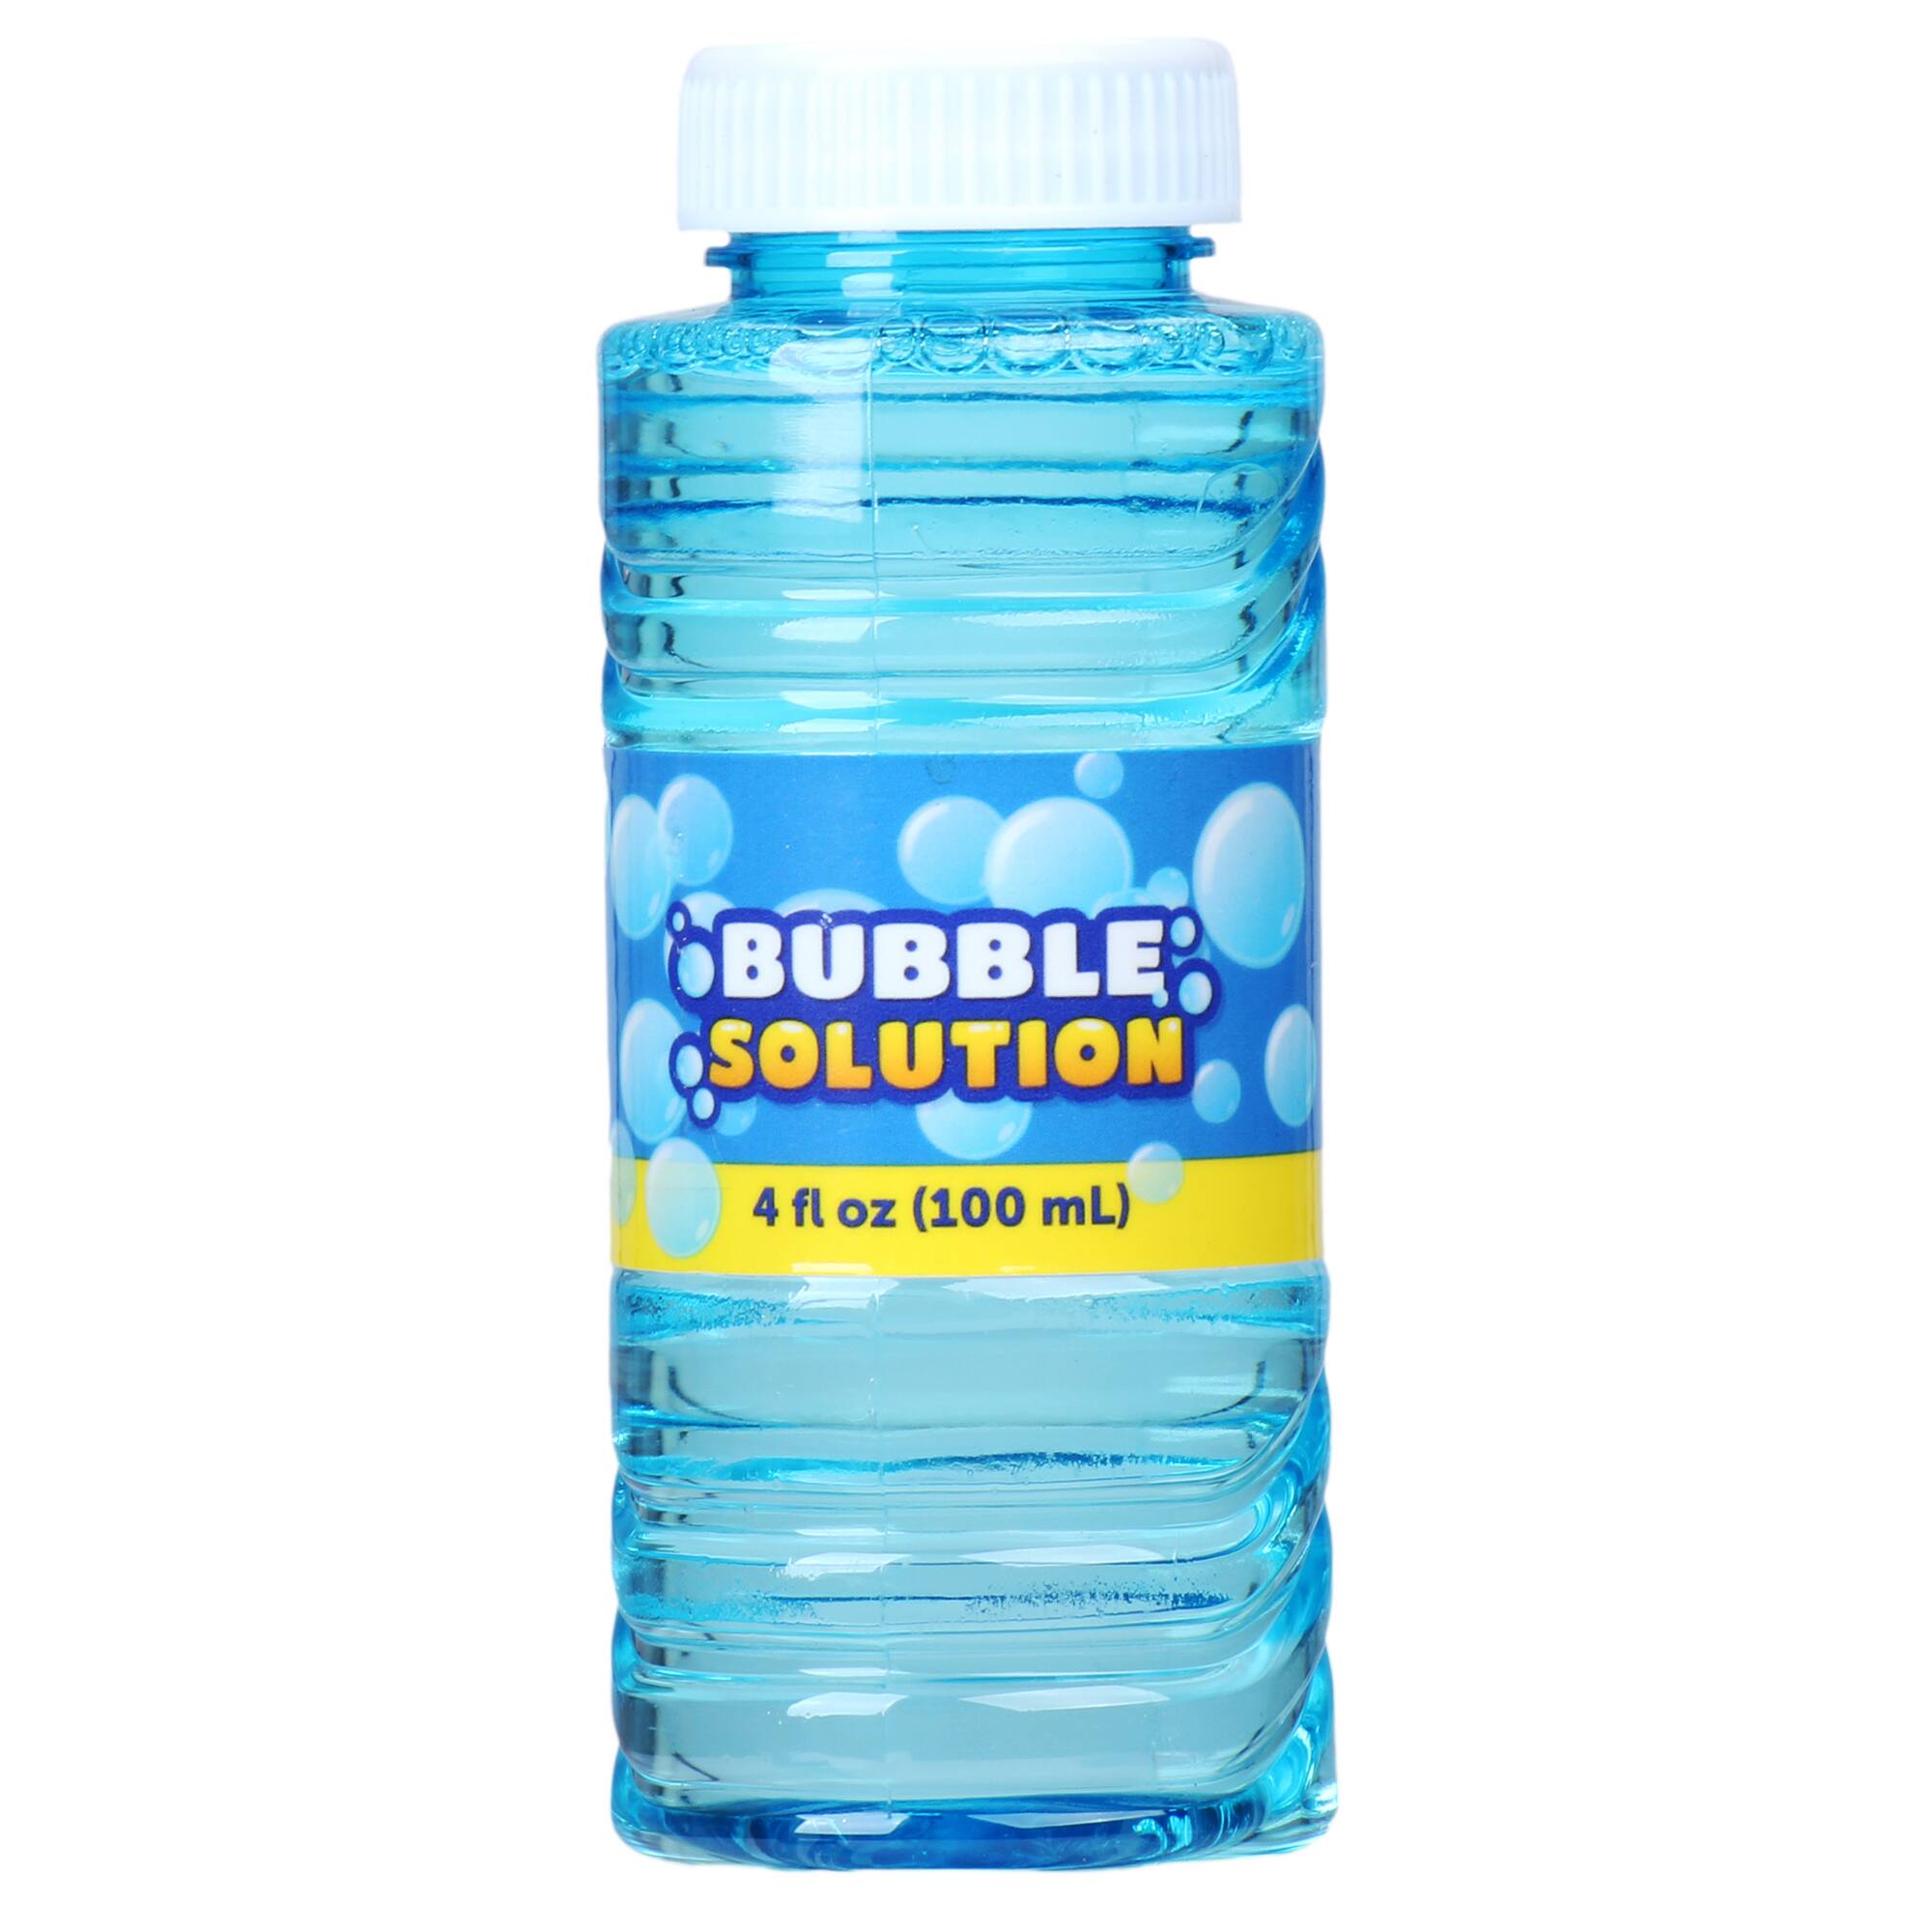 Kid Galaxy&#xAE; Blue Shark Bubble Blower Toy